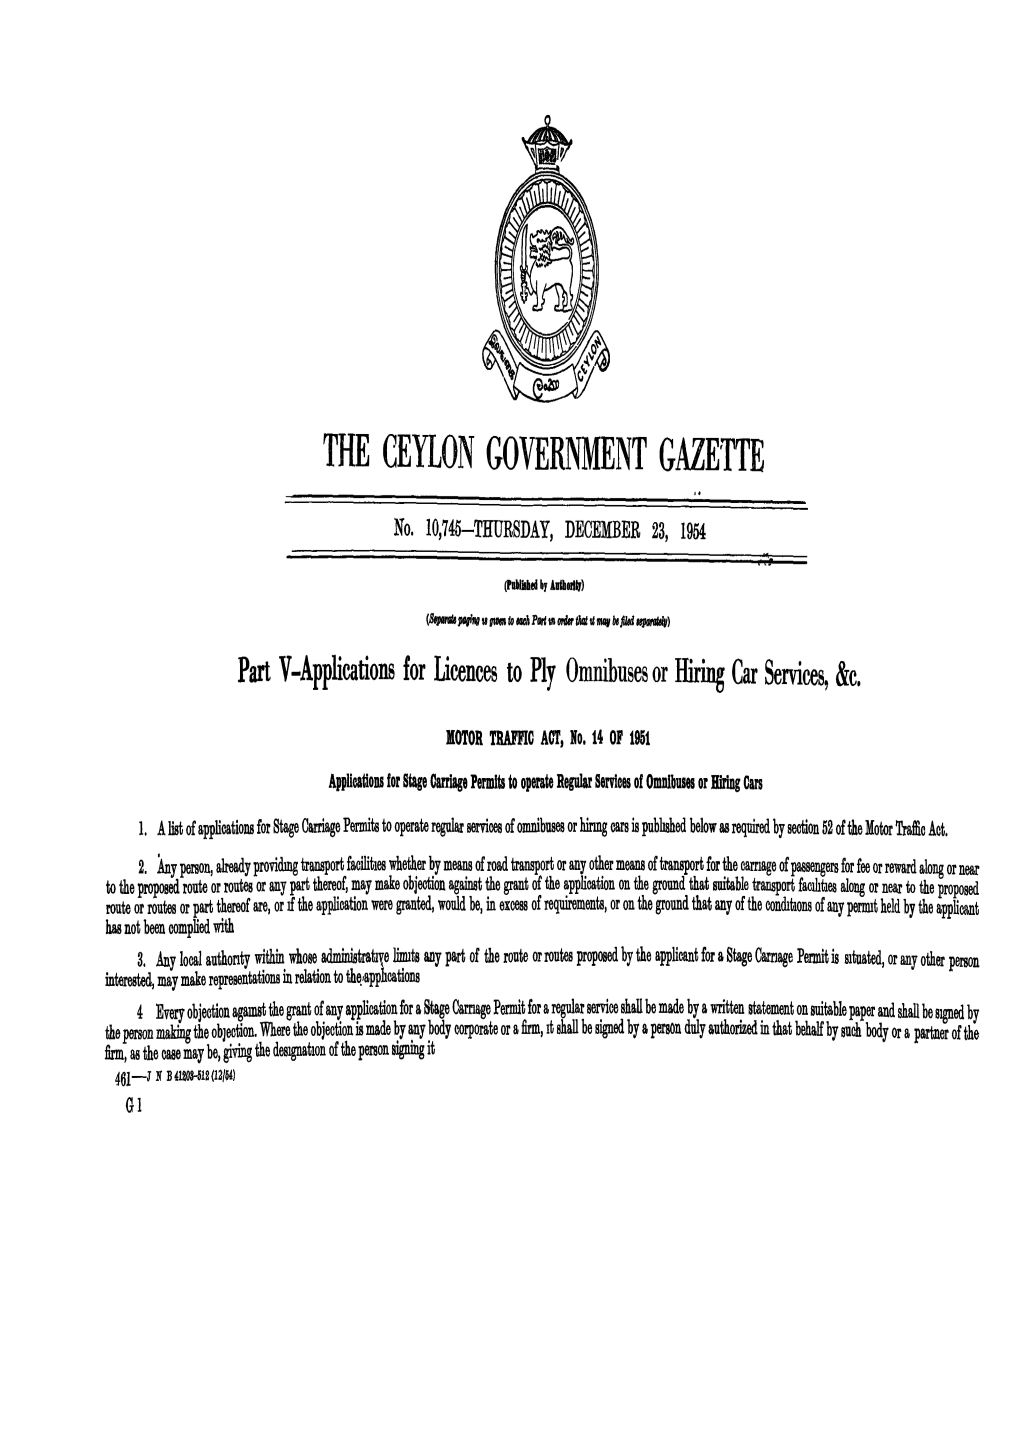 The Ceylon Government Gazette